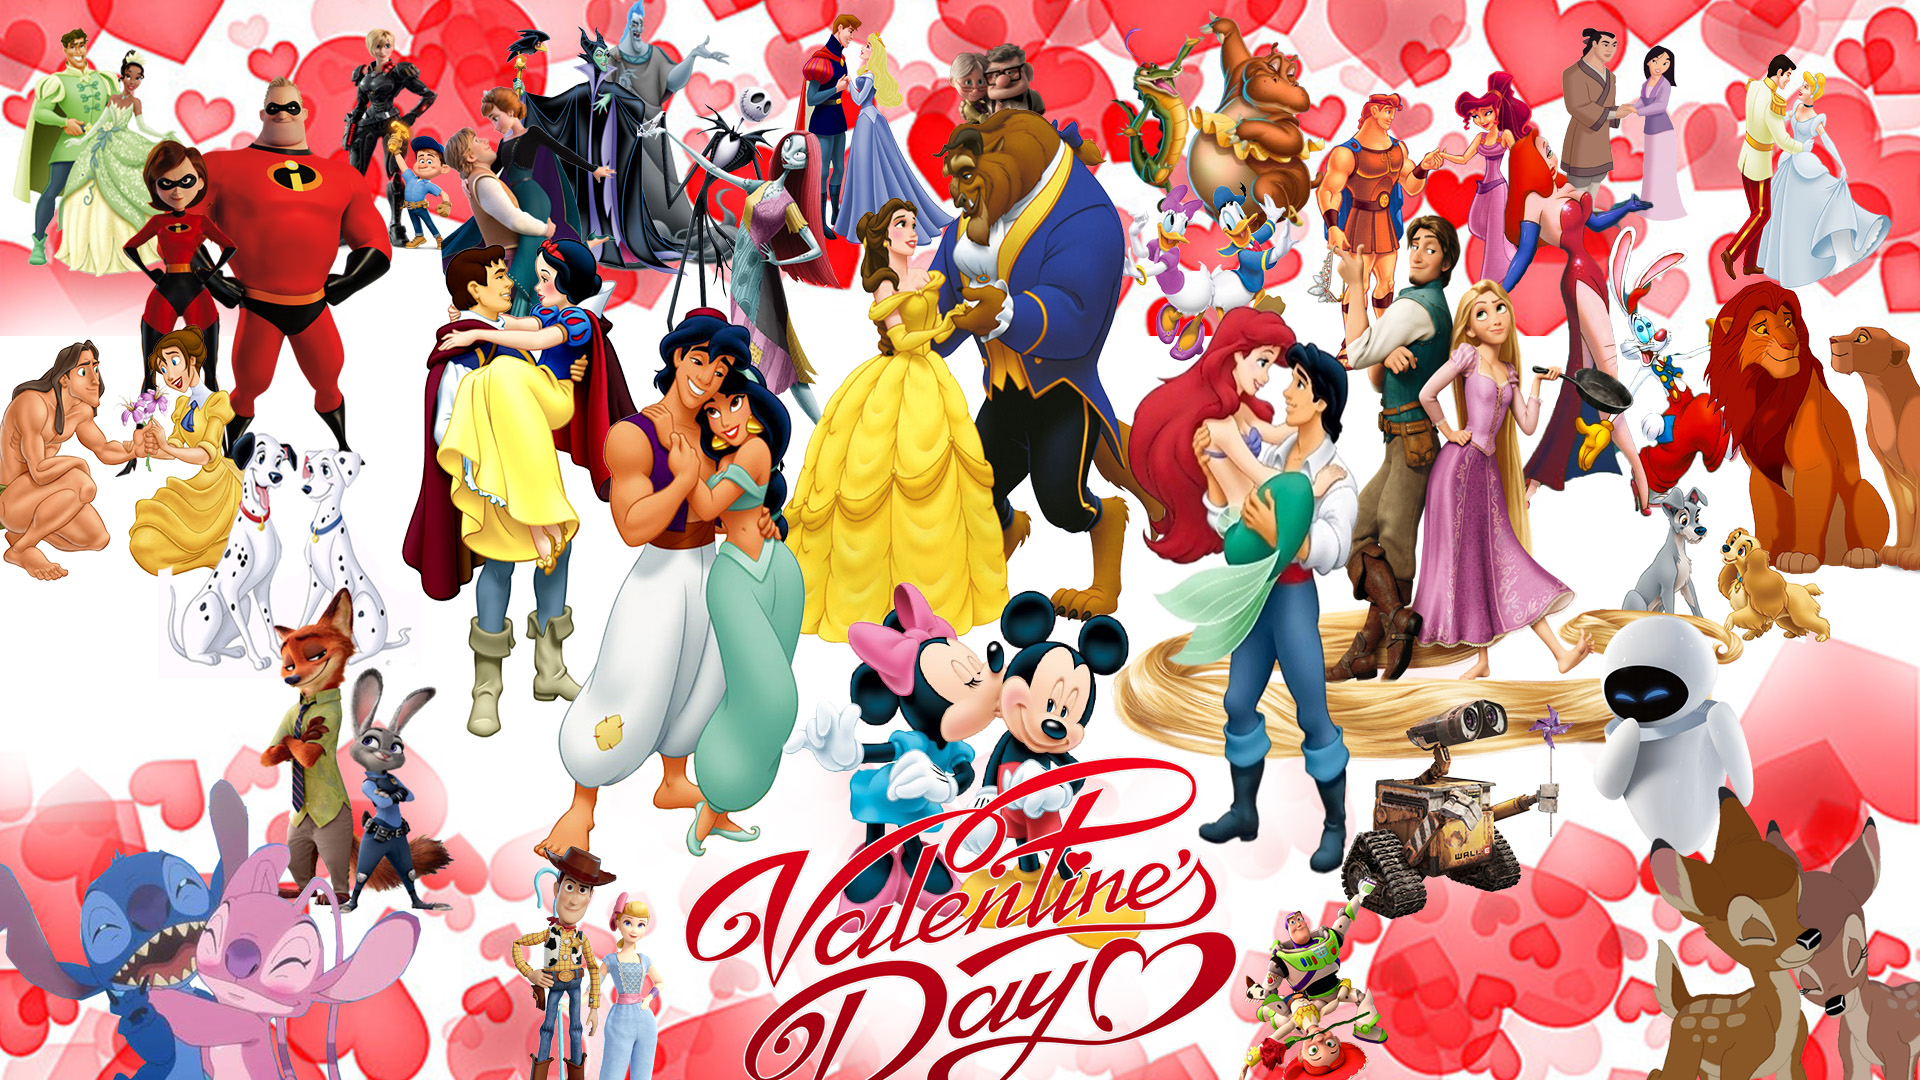 Valentine's Day: Disney Sweethearts by Thekingblader995 on DeviantArt